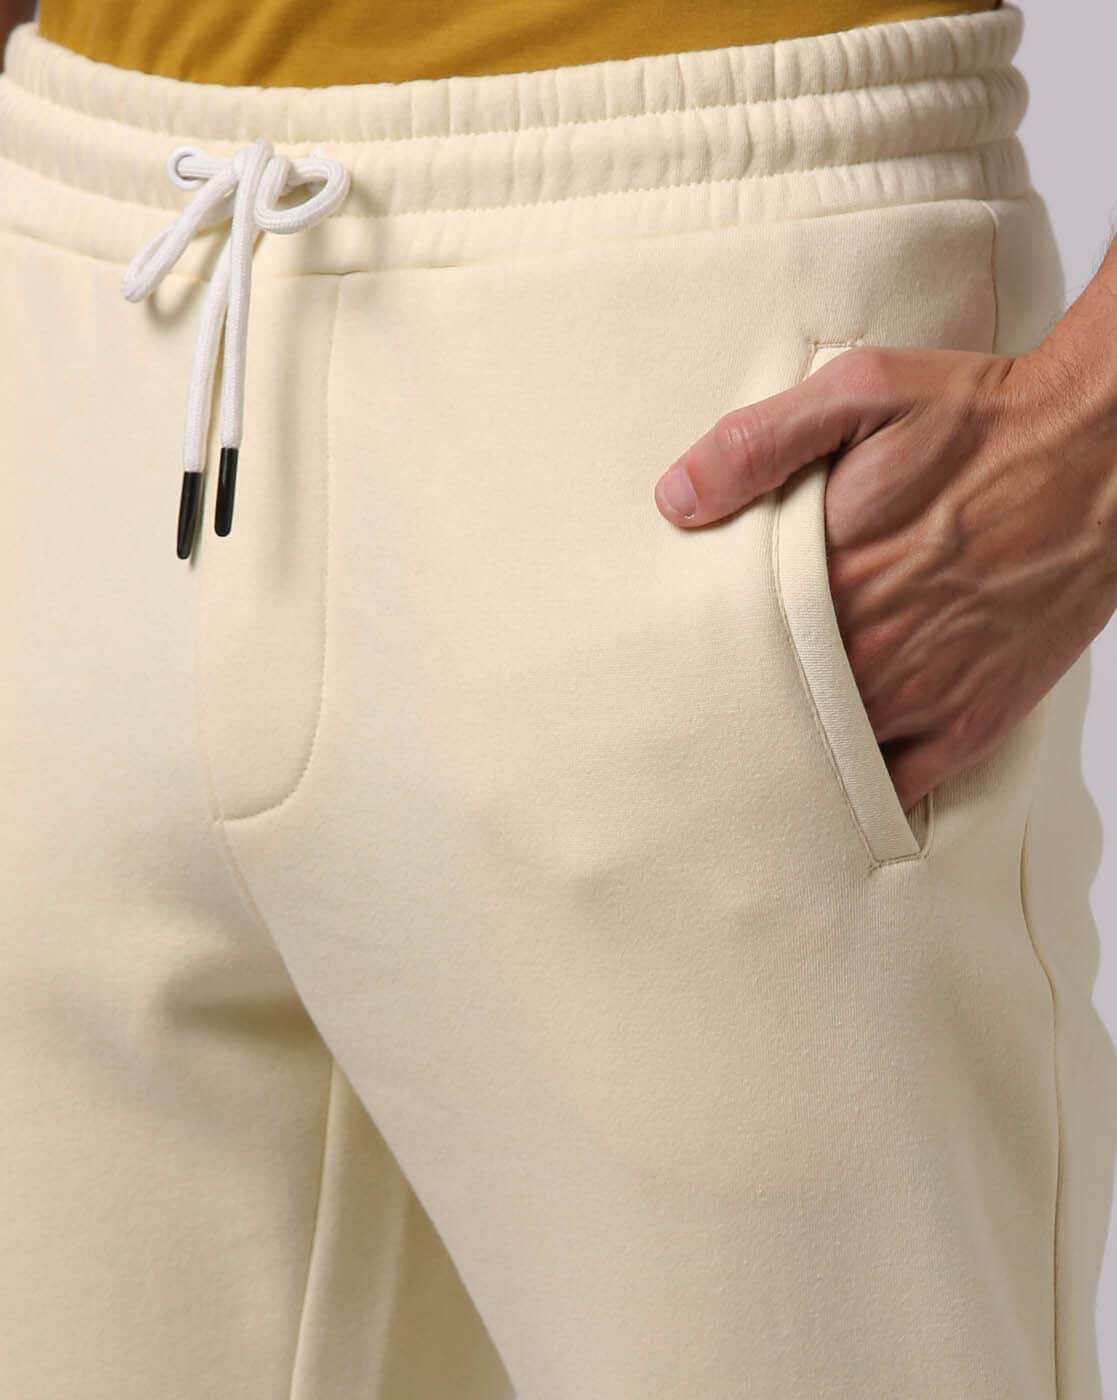 JNGSA Casual Men's Wide Leg Pants Printed Lace-Up Lesuire Pants Drawstring  Sweatpants Work Pants Joggers for Men White Clearance 